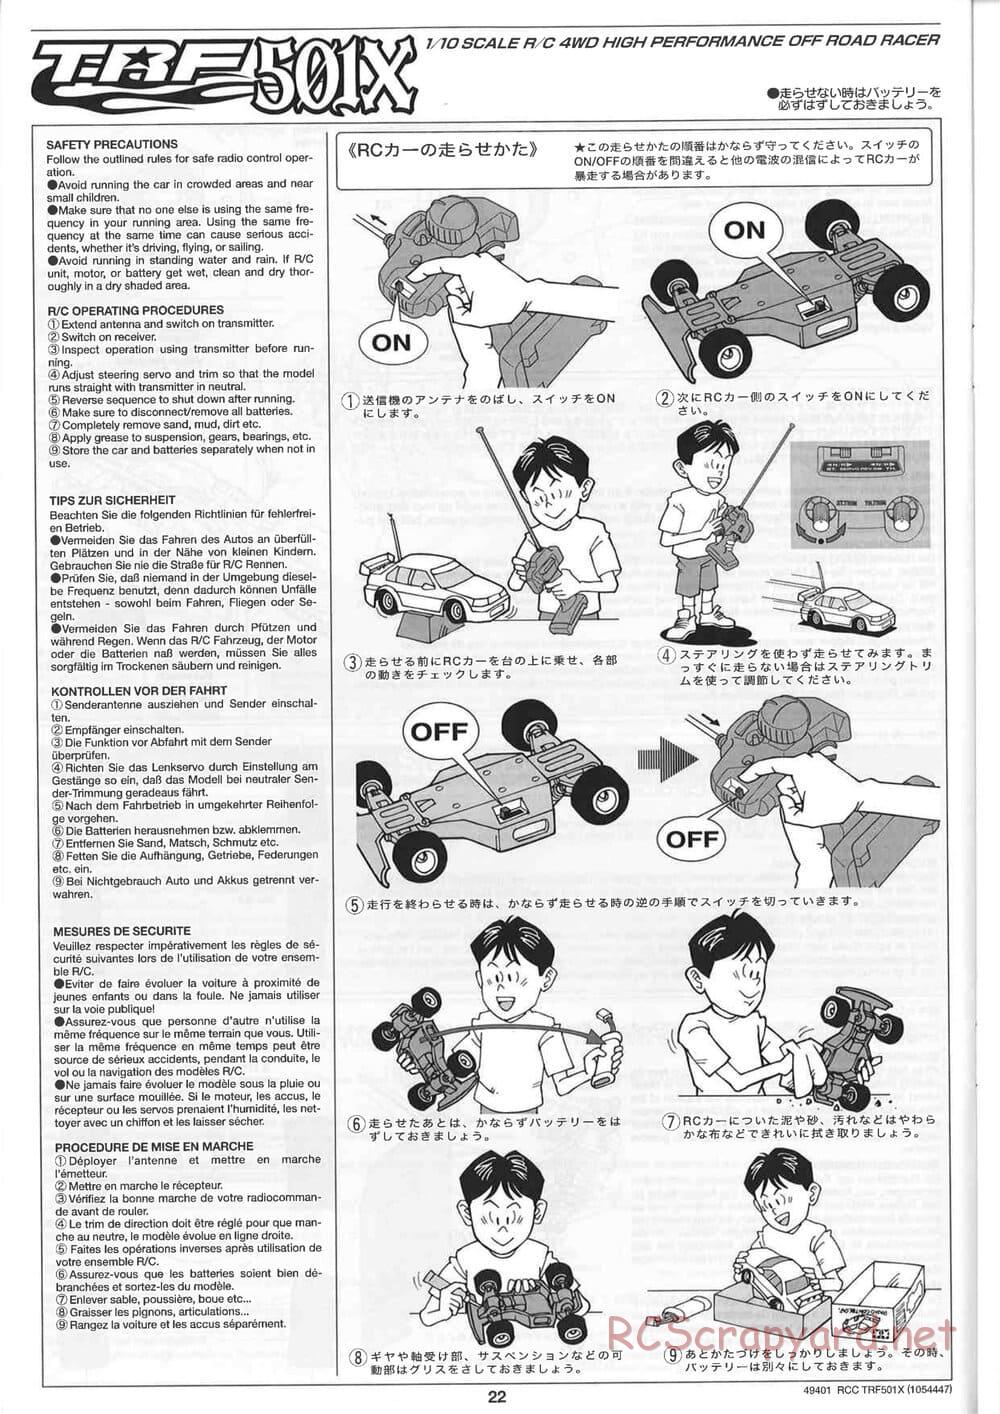 Tamiya - TRF501X Chassis - Manual - Page 22